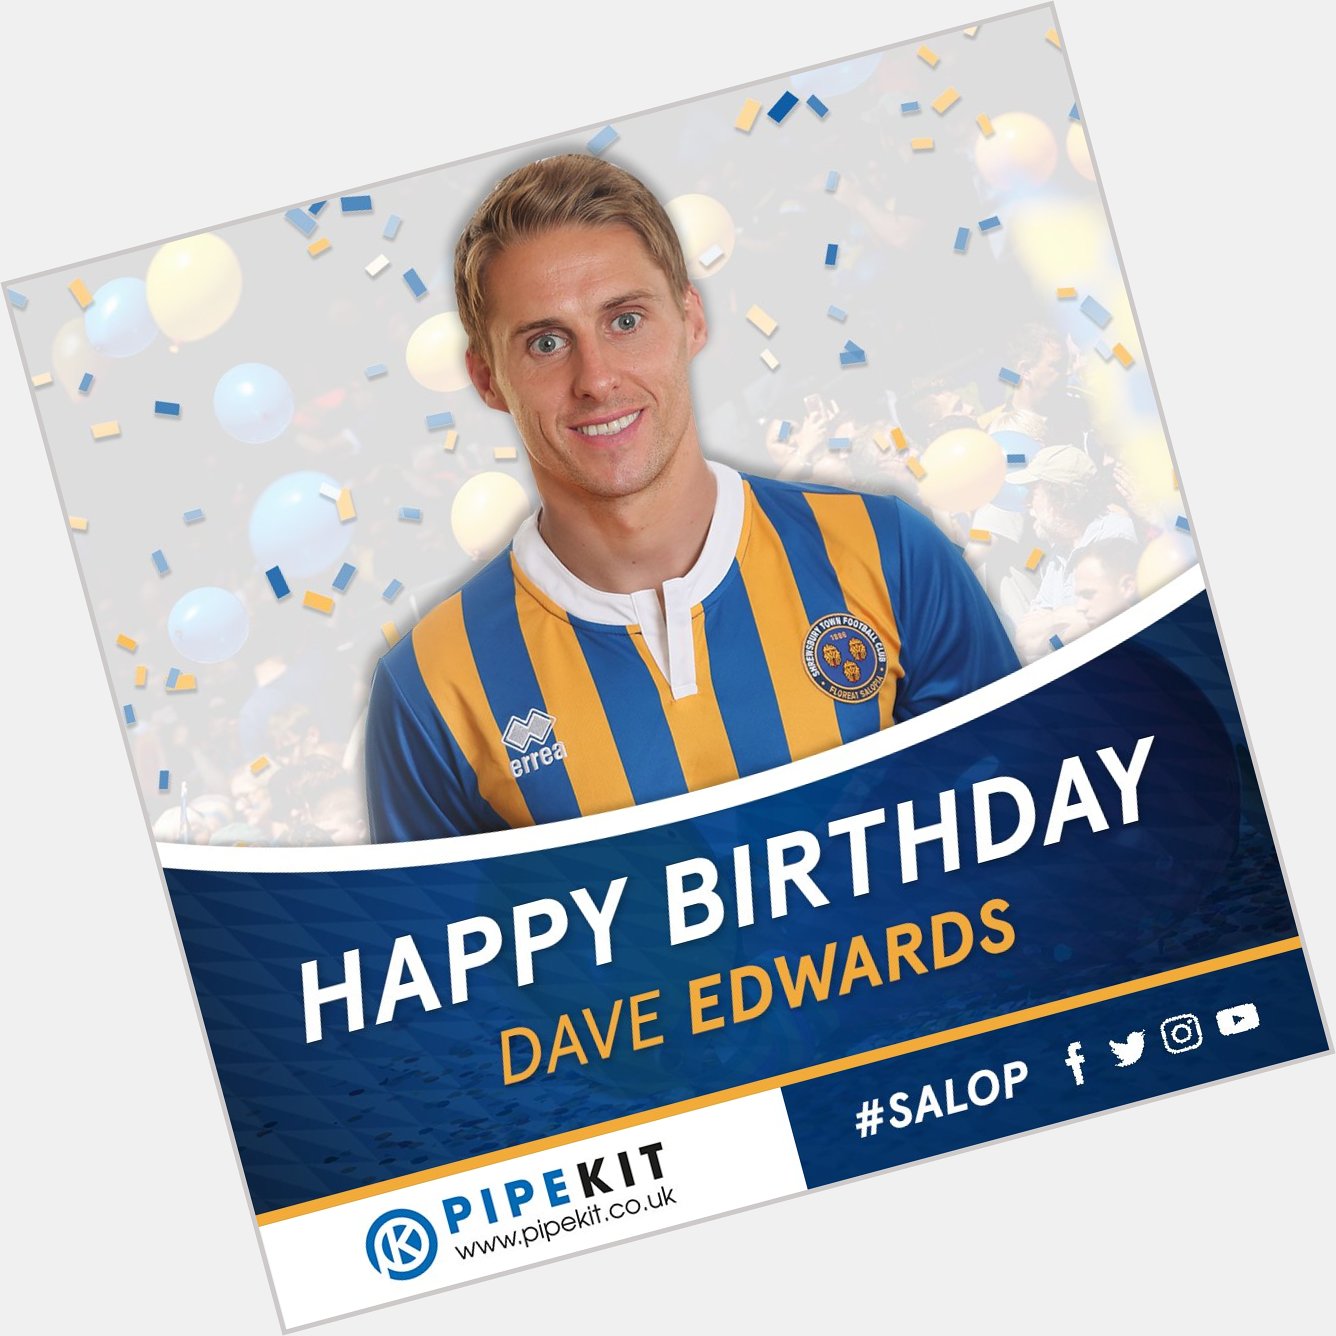 HAPPY BIRTHDAY to Dave Edwards from everybody at Shrewsbury Town! 